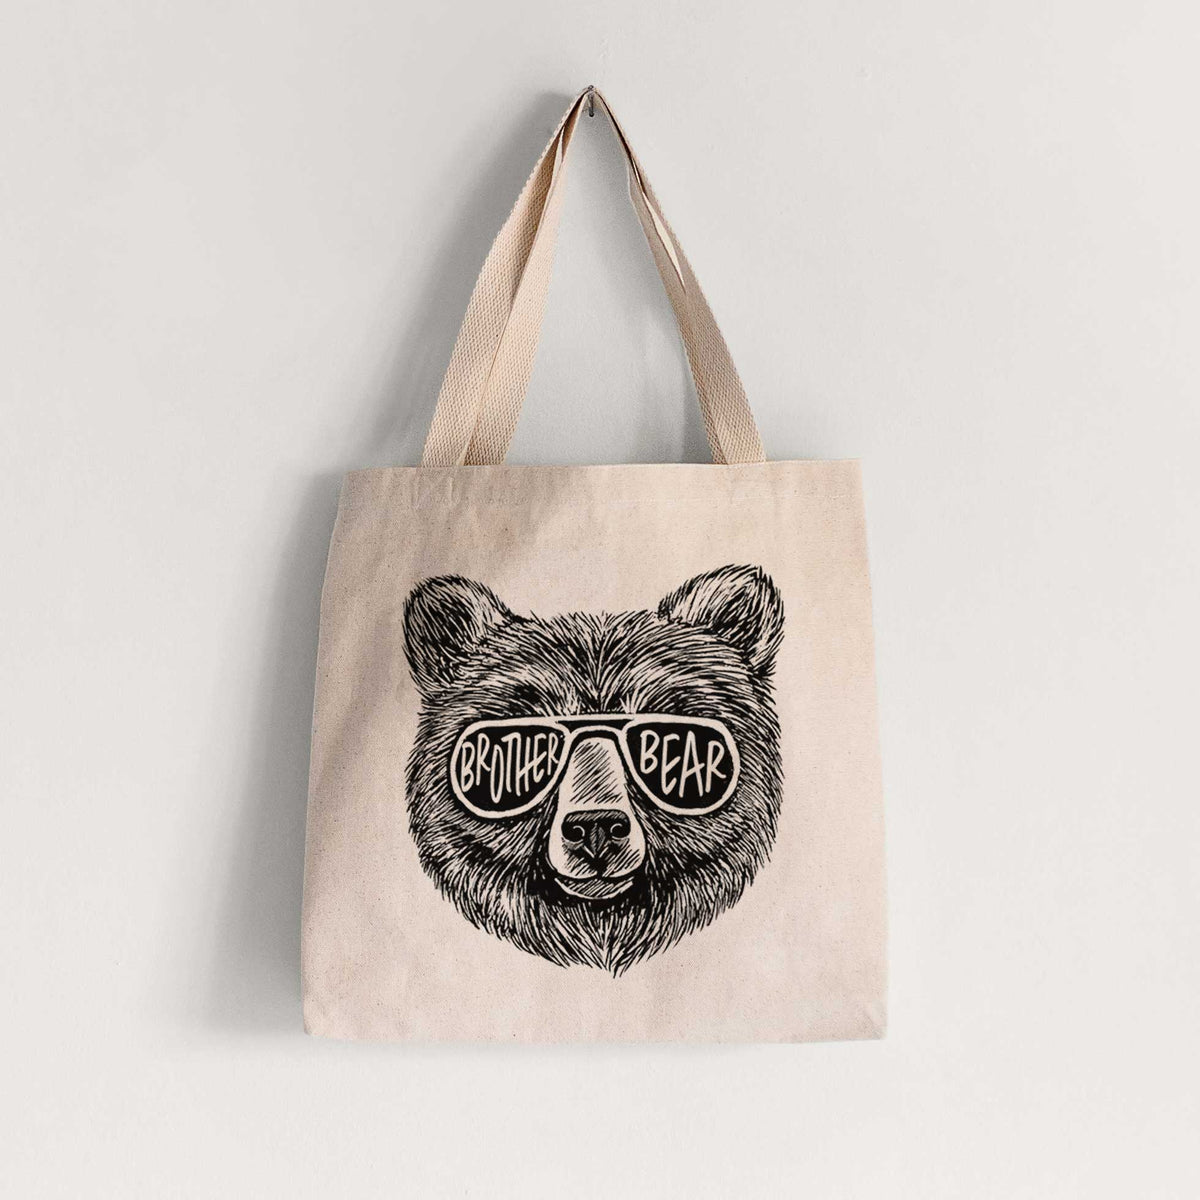 Brother Bear - Tote Bag